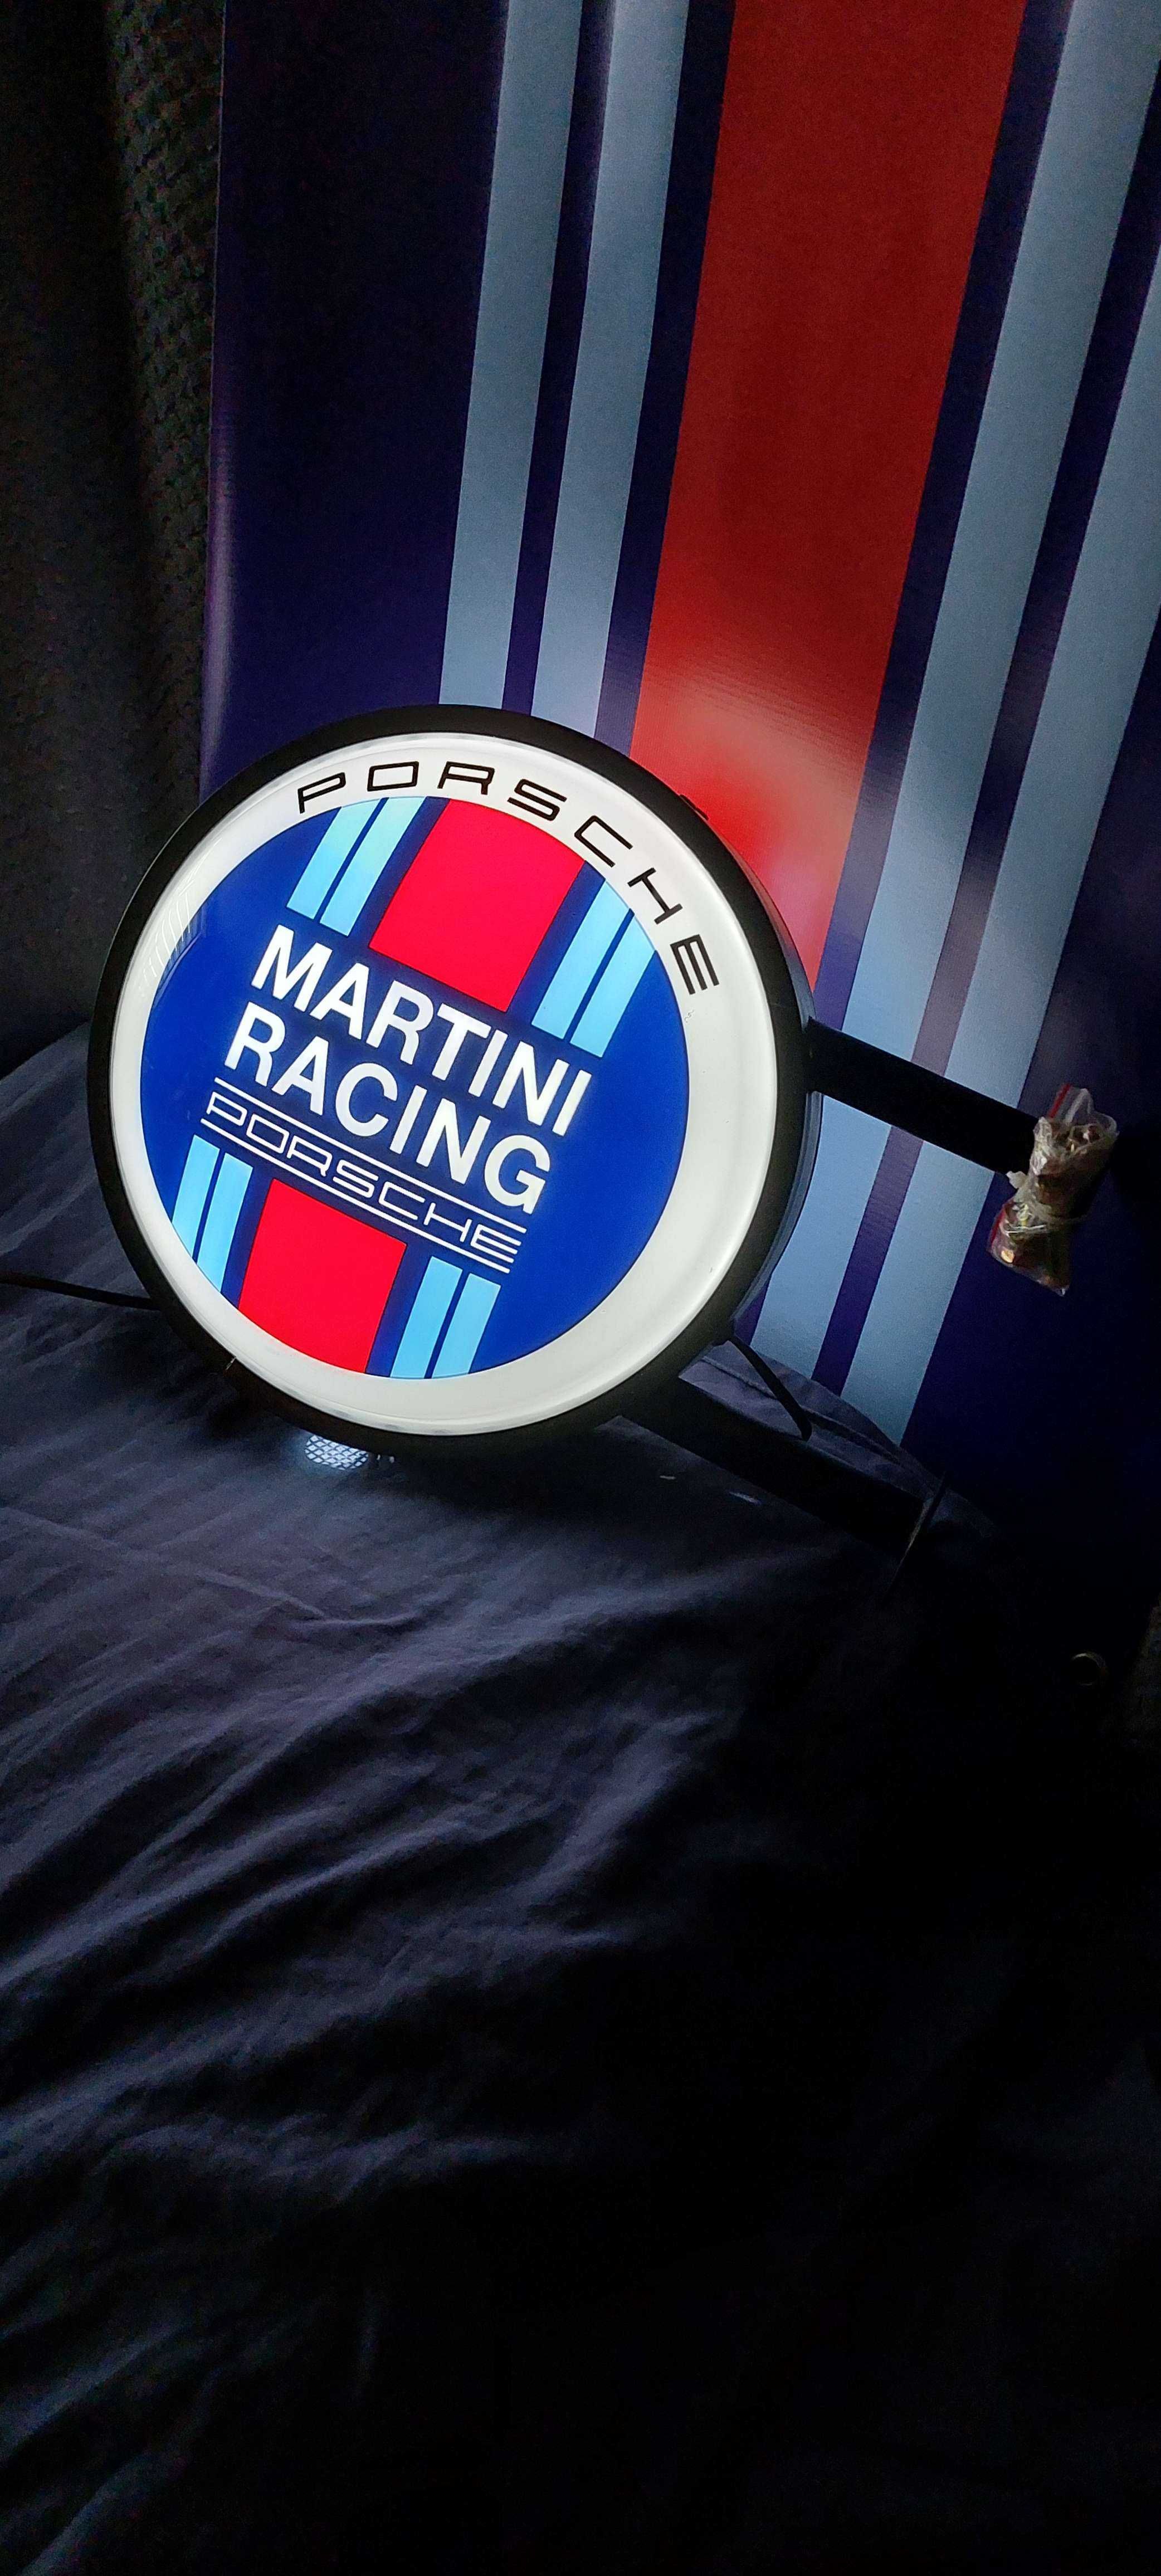 Reklama, kaseton, baner , lampa, podświetlane logo Martini